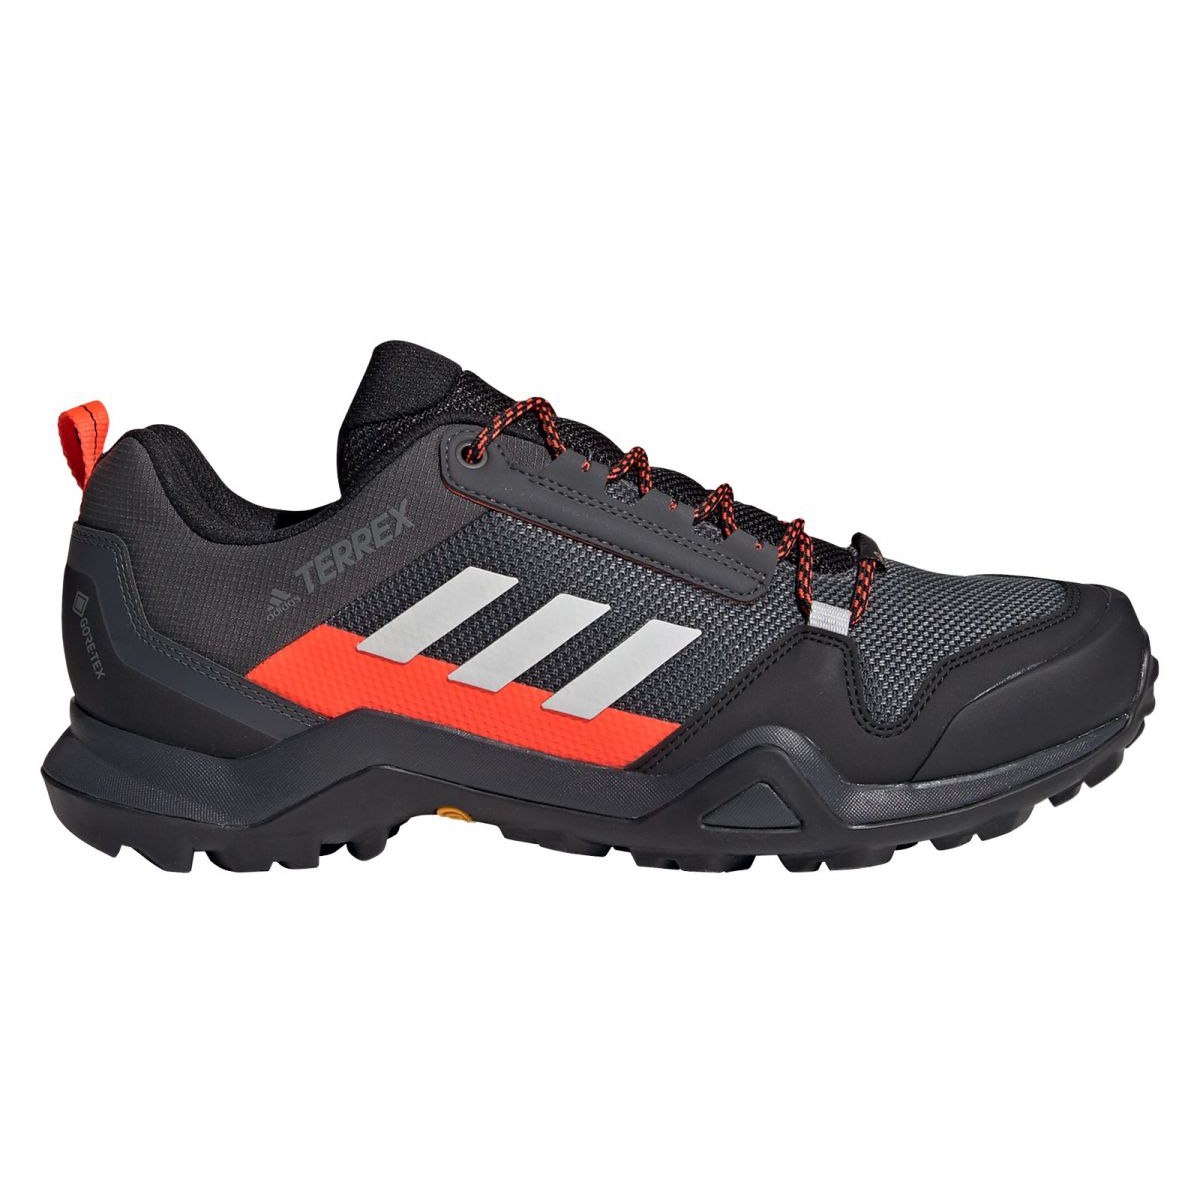 Adidas Terrex AX3 Gtx M FX4568 shoes grey multicolored - KeeShoes